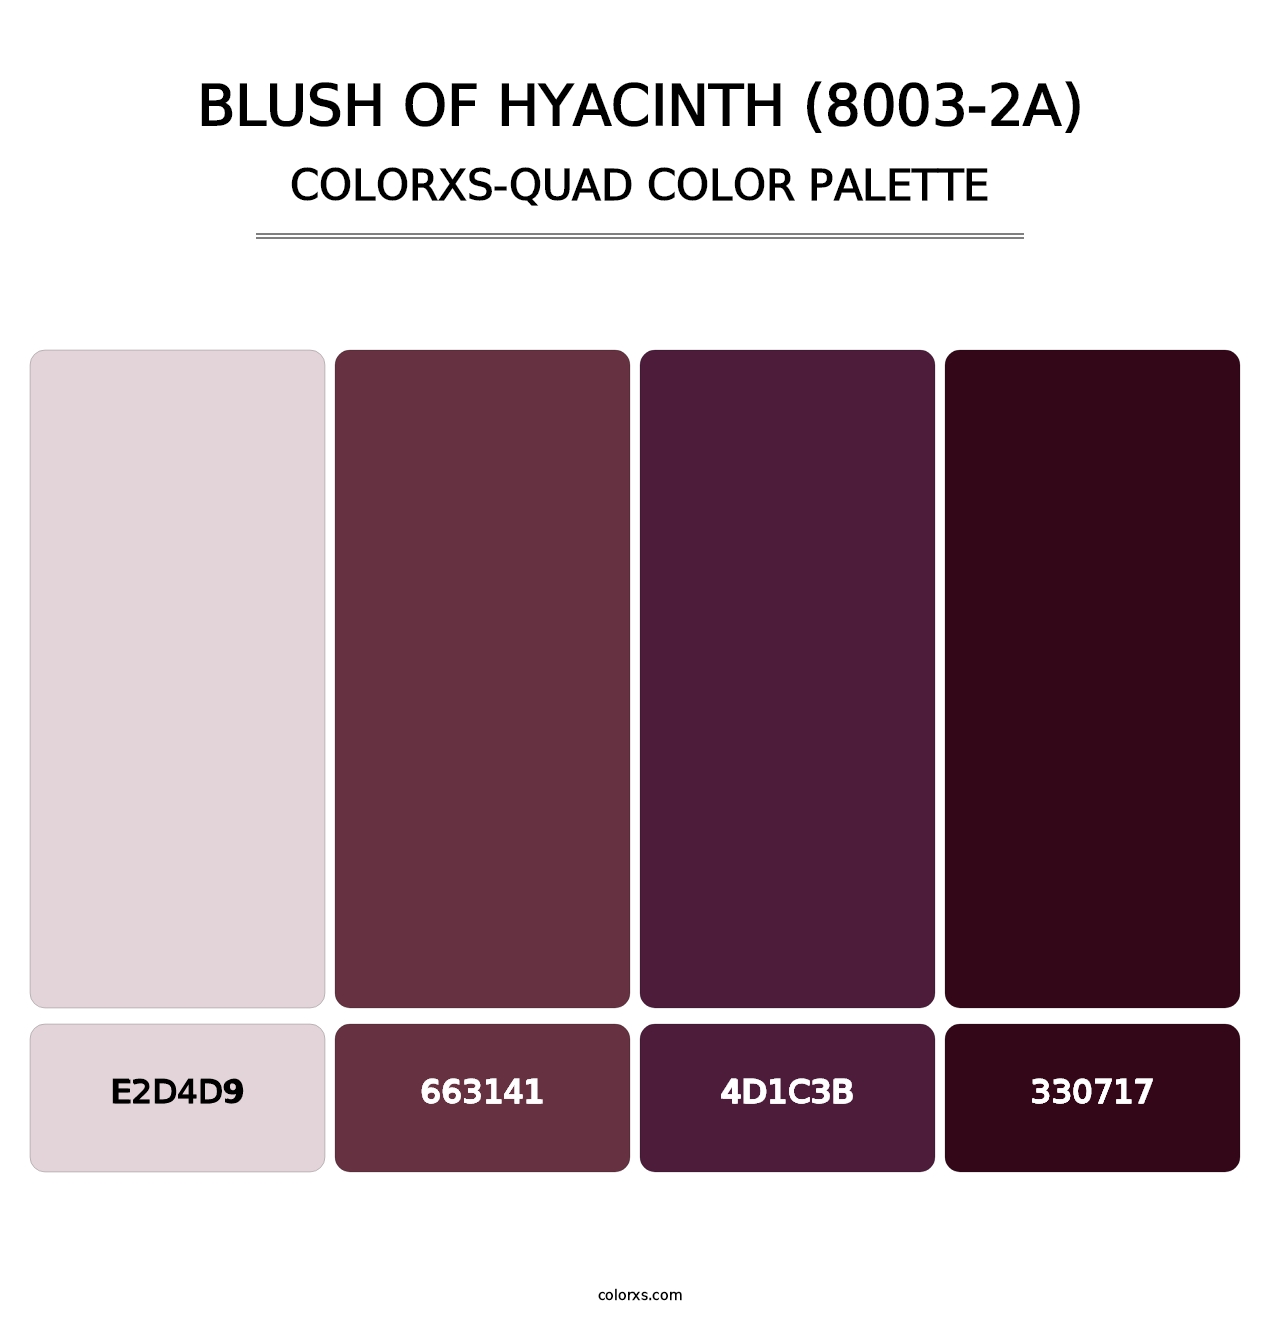 Blush of Hyacinth (8003-2A) - Colorxs Quad Palette